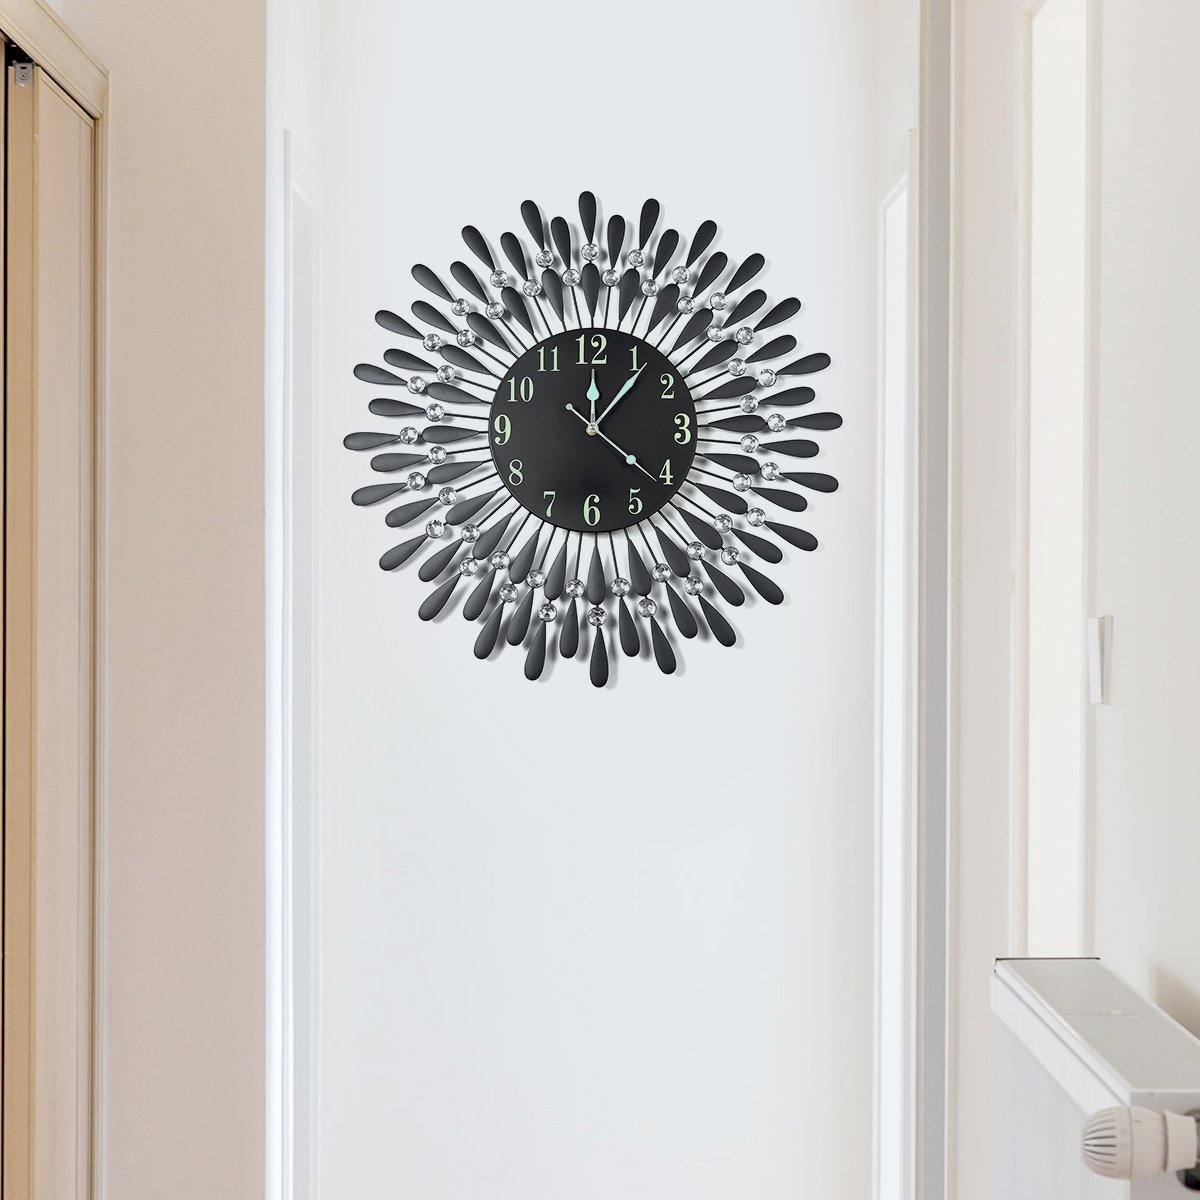 Large Modern Iron Art 3D Crystal Wall Clock